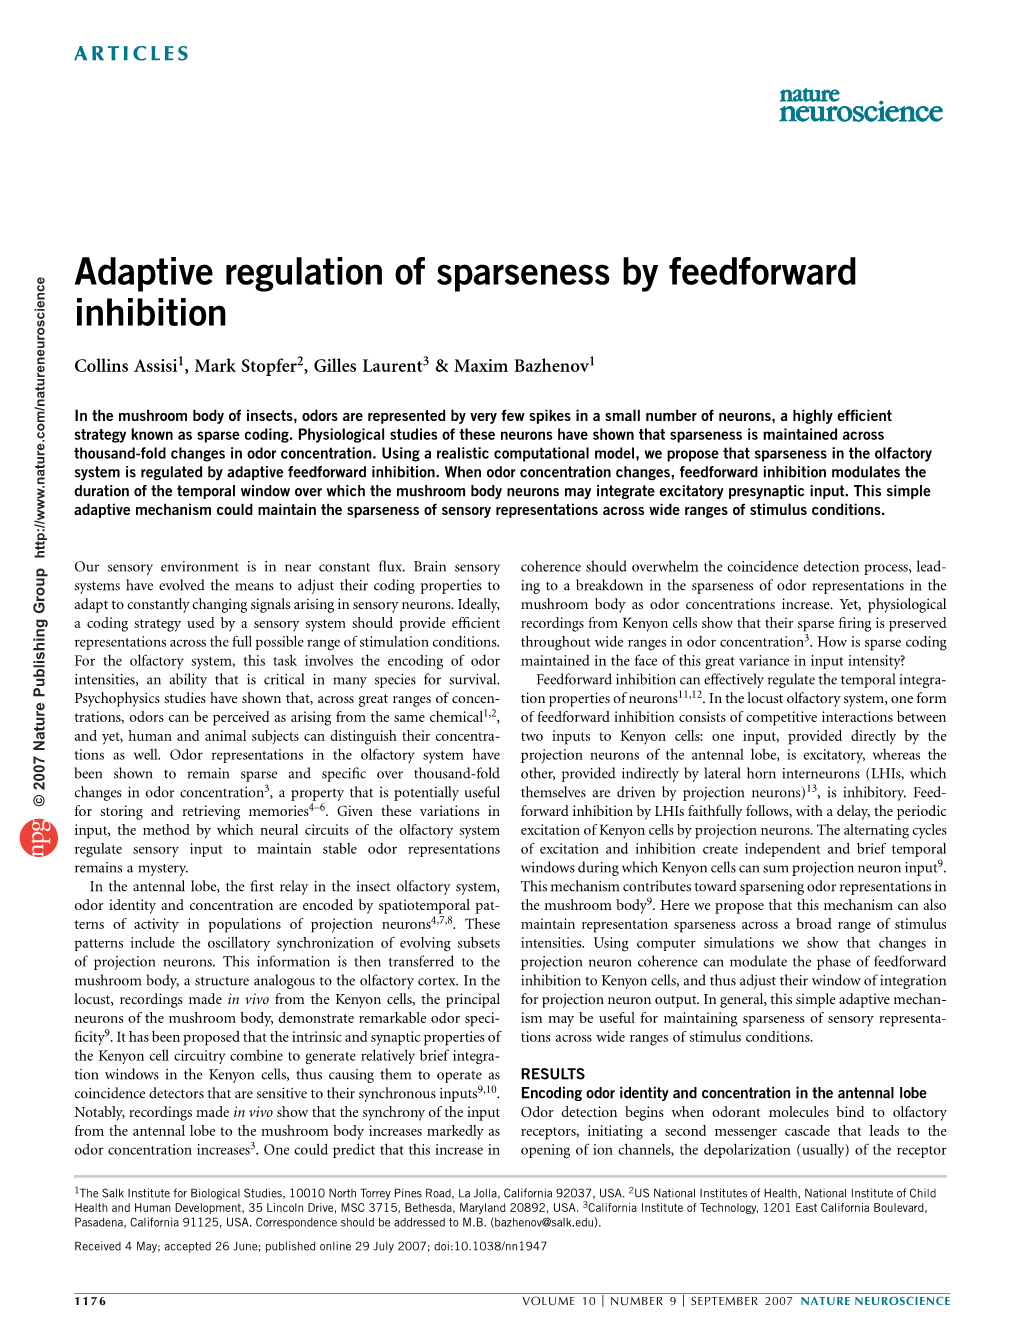 Adaptive Regulation of Sparseness by Feedforward Inhibition